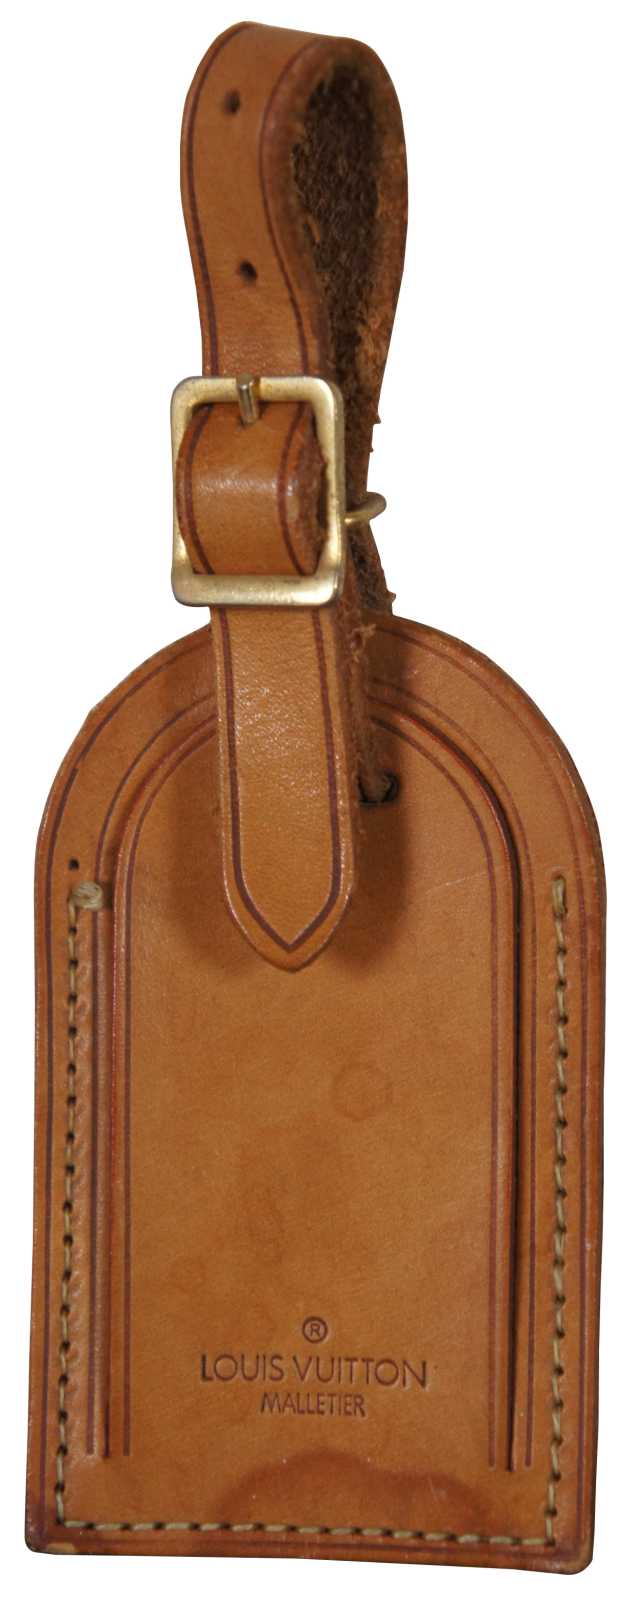 Vtg Louis Vuitton Malletier Vachetta Leather Luggage Suitcase Name Travel  Tag